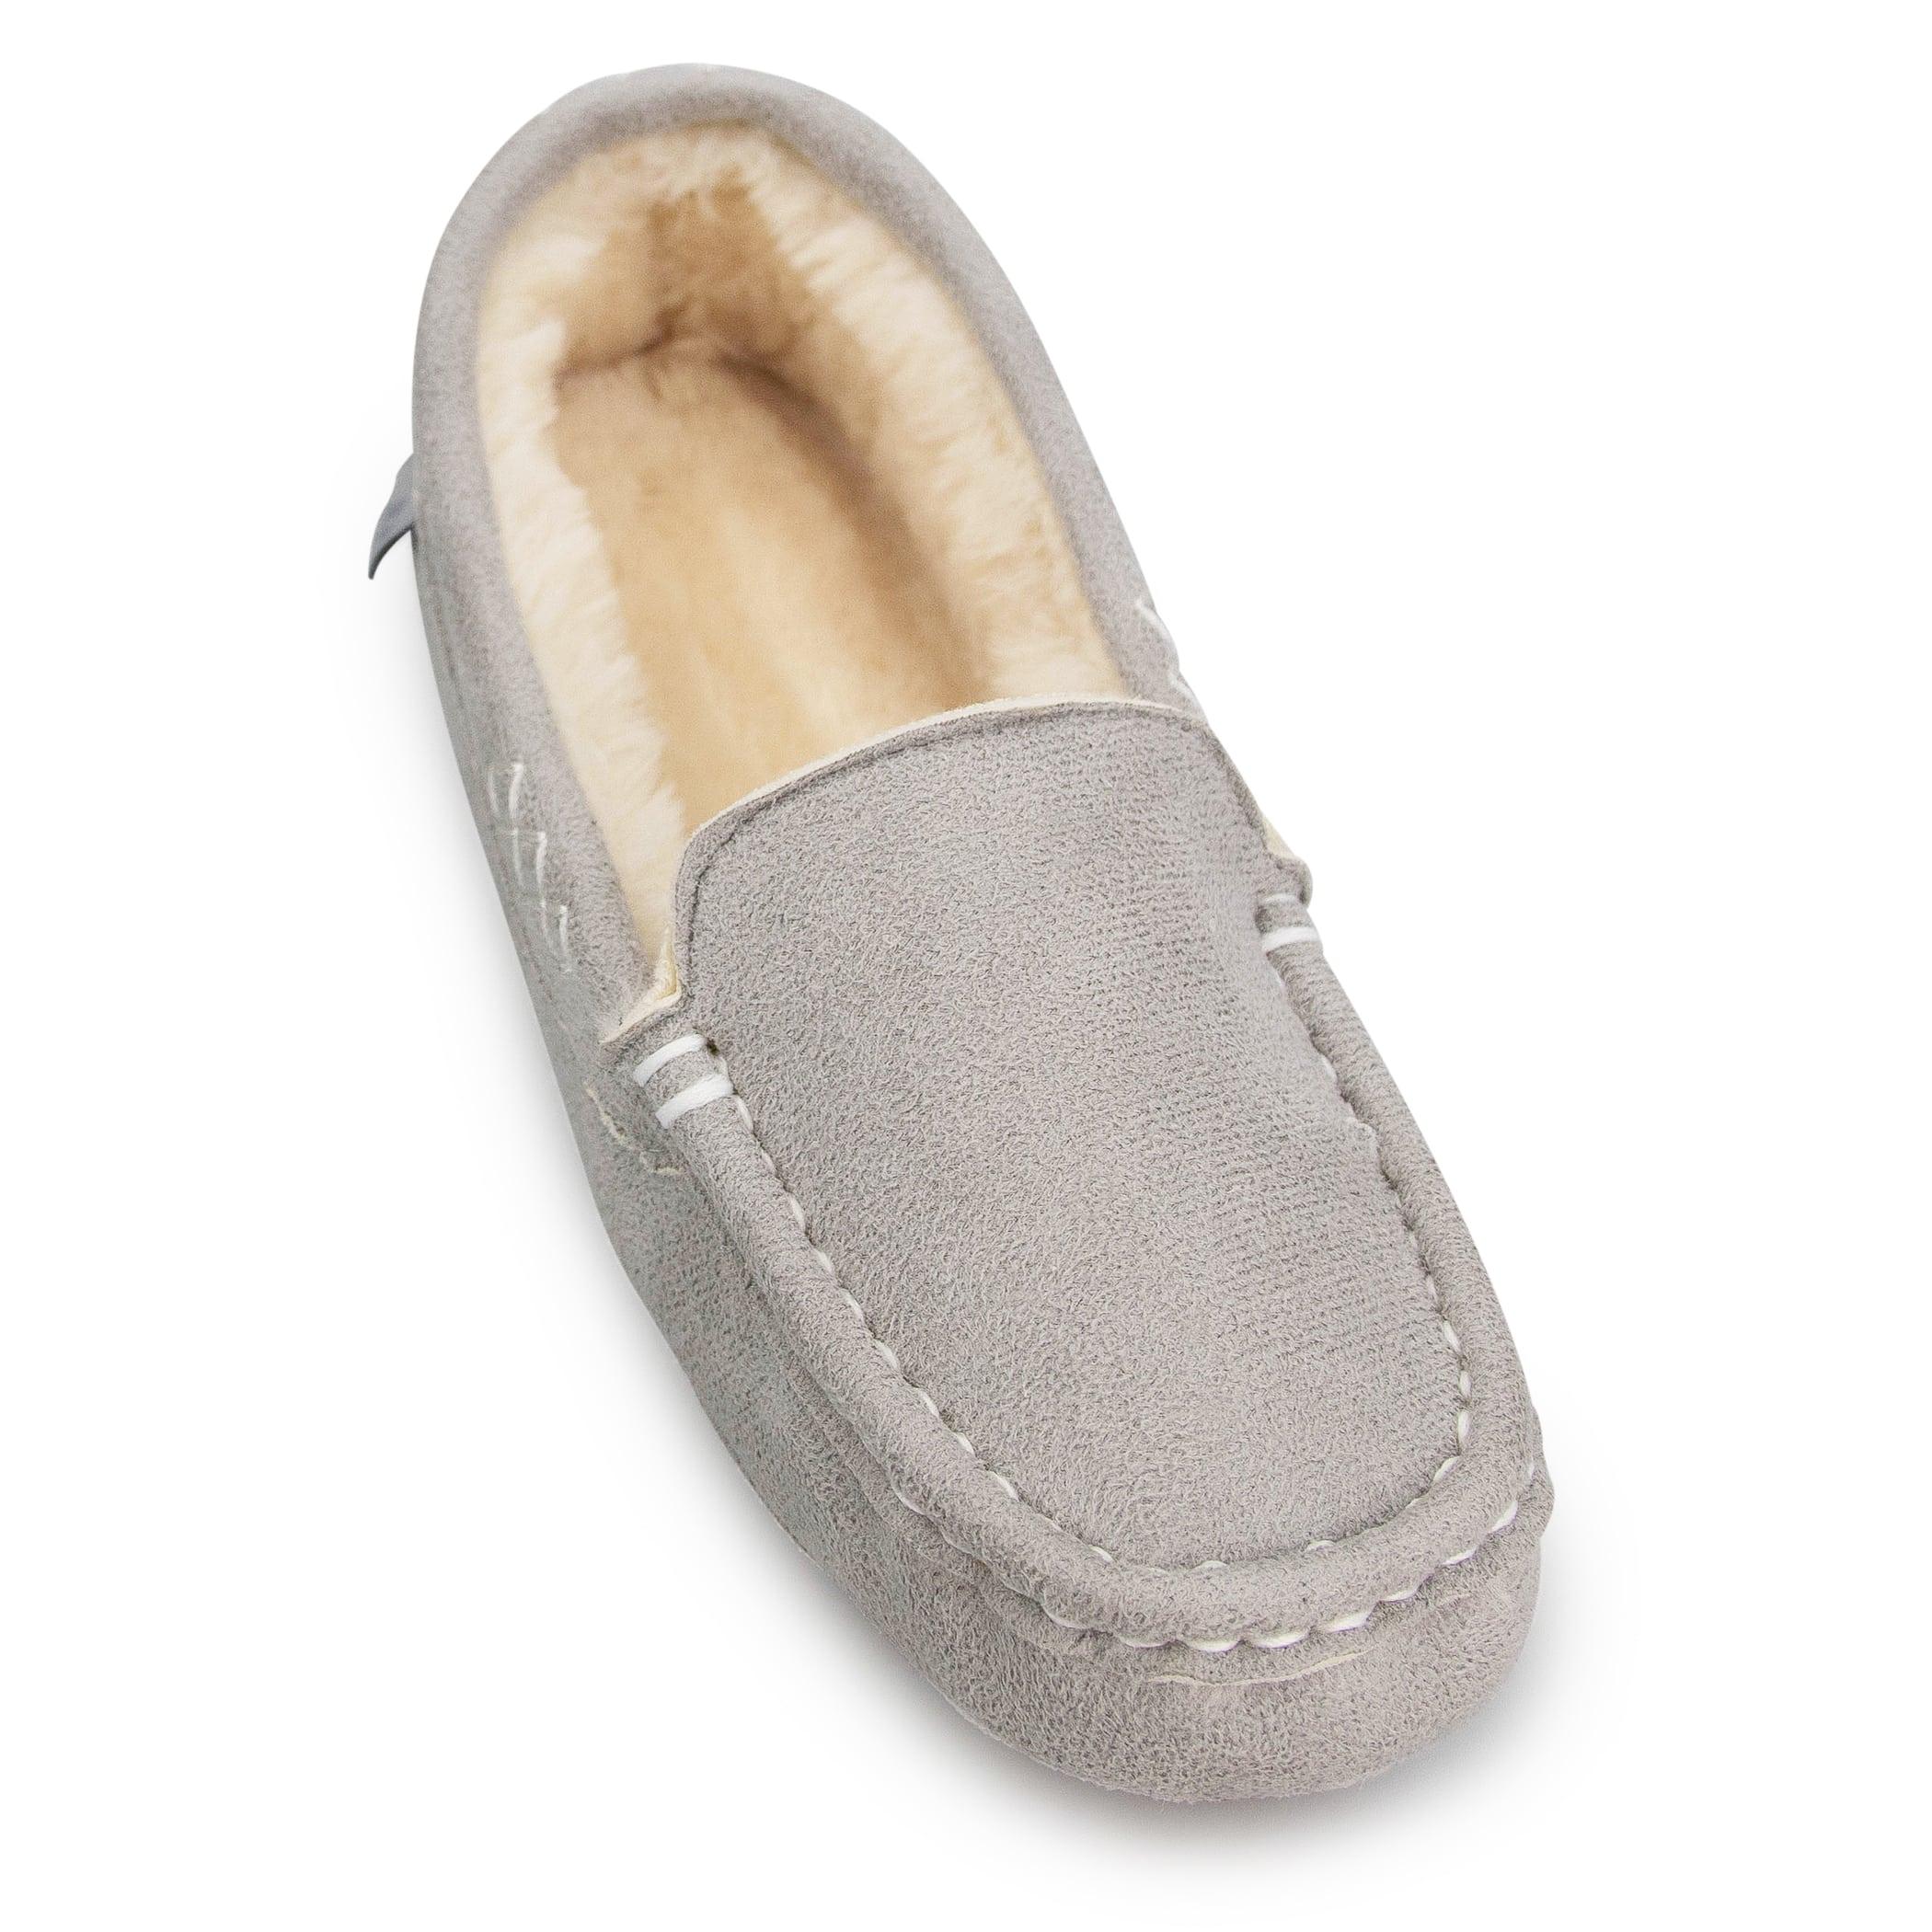 pantufa heat holders estilo sapatilha forrada com lã